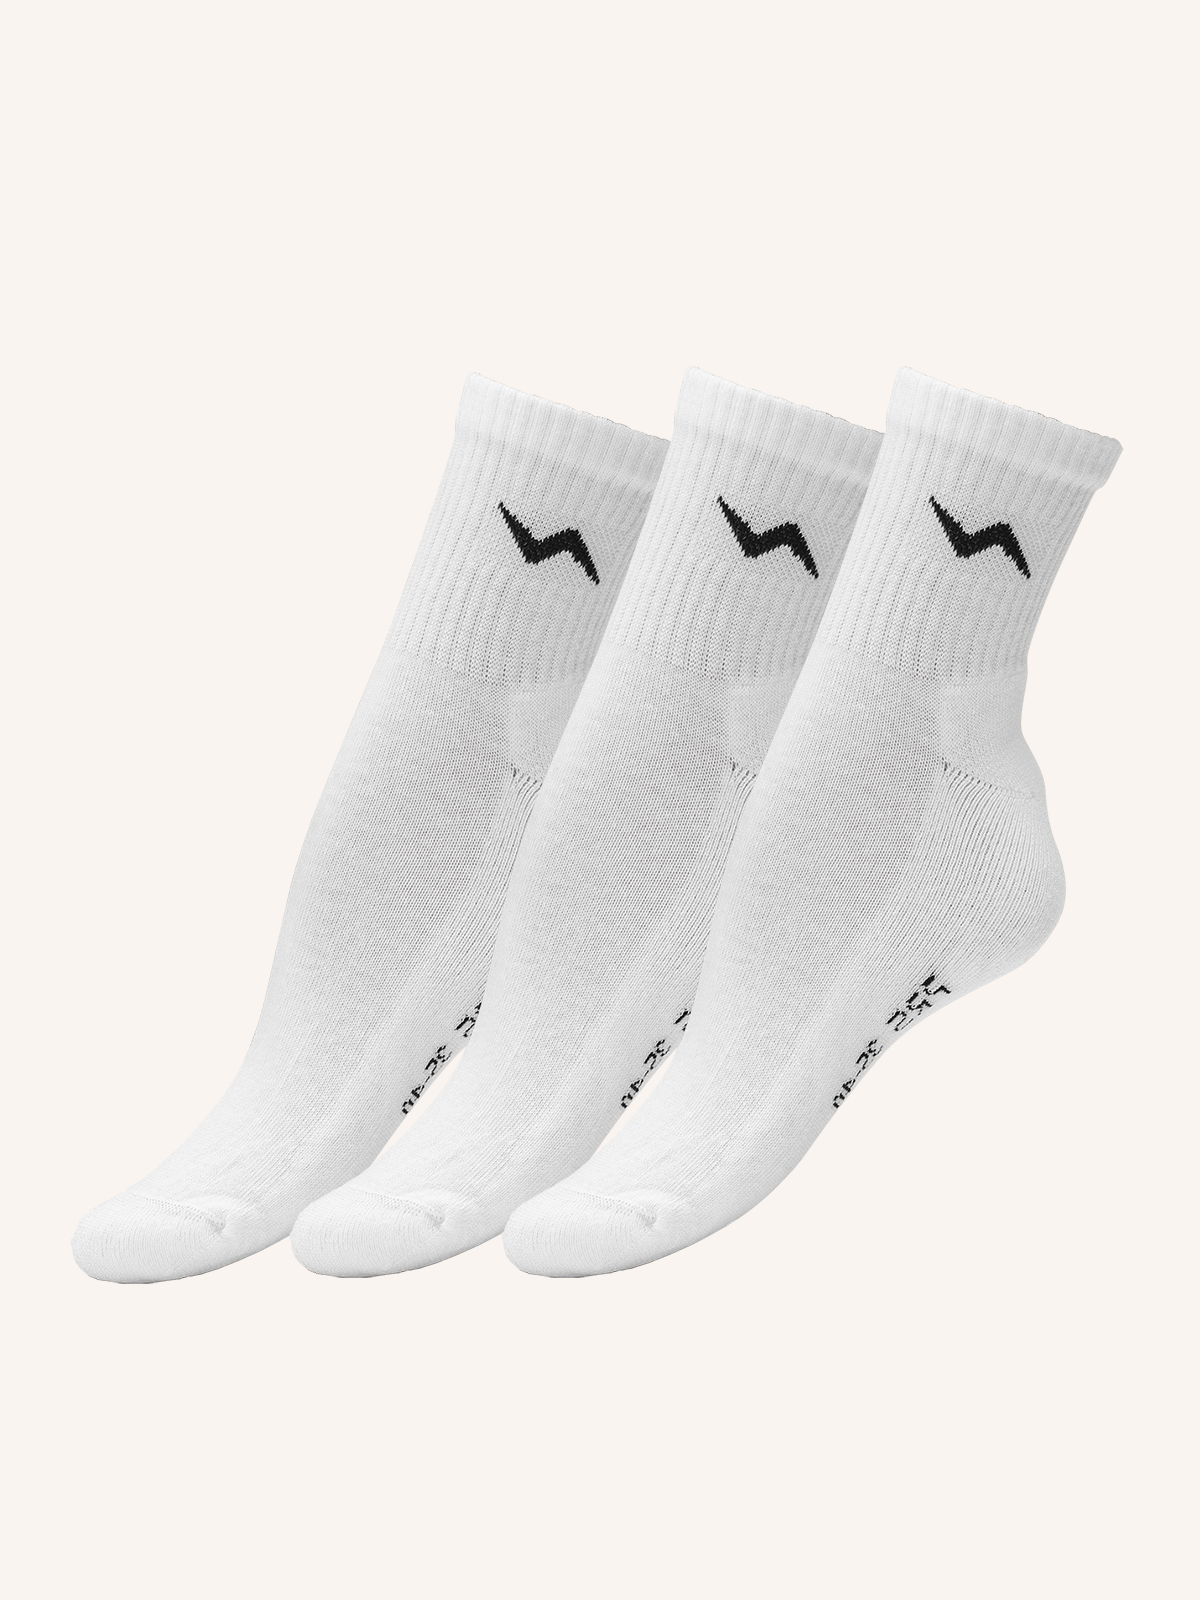 Cotton Socks for Women's Tennis | Plain Color | Pack of 3 Pairs | PRS 50D